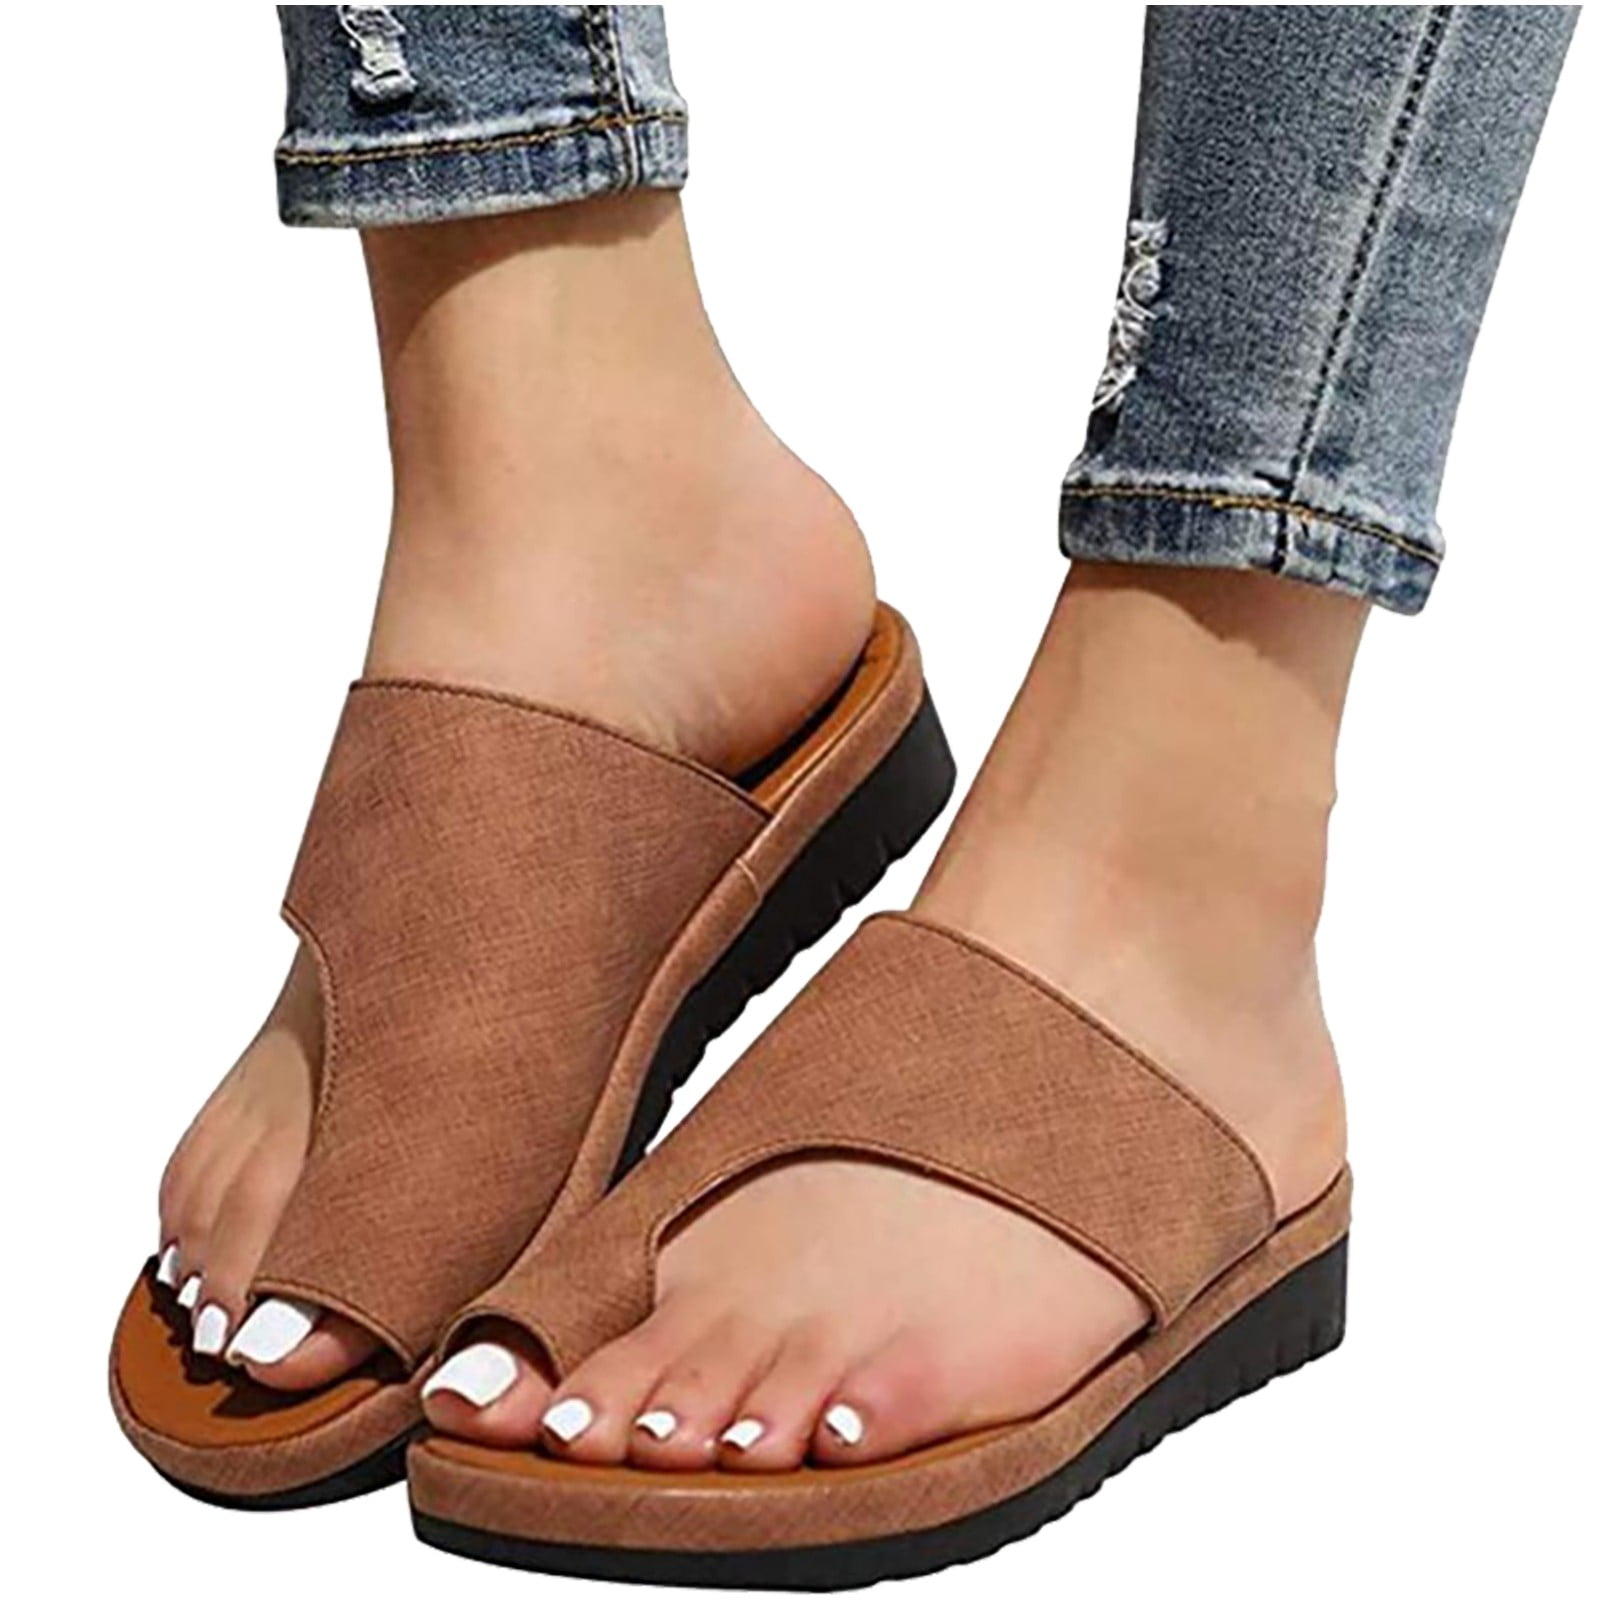 Women Rhinestone Flip-Flops Wedges Comfy Flats Sandal Shoes Platform Sandals Open Toe Creative Beach Travel Anti-Slipper Shoes for Ladies Girl Girlfriends